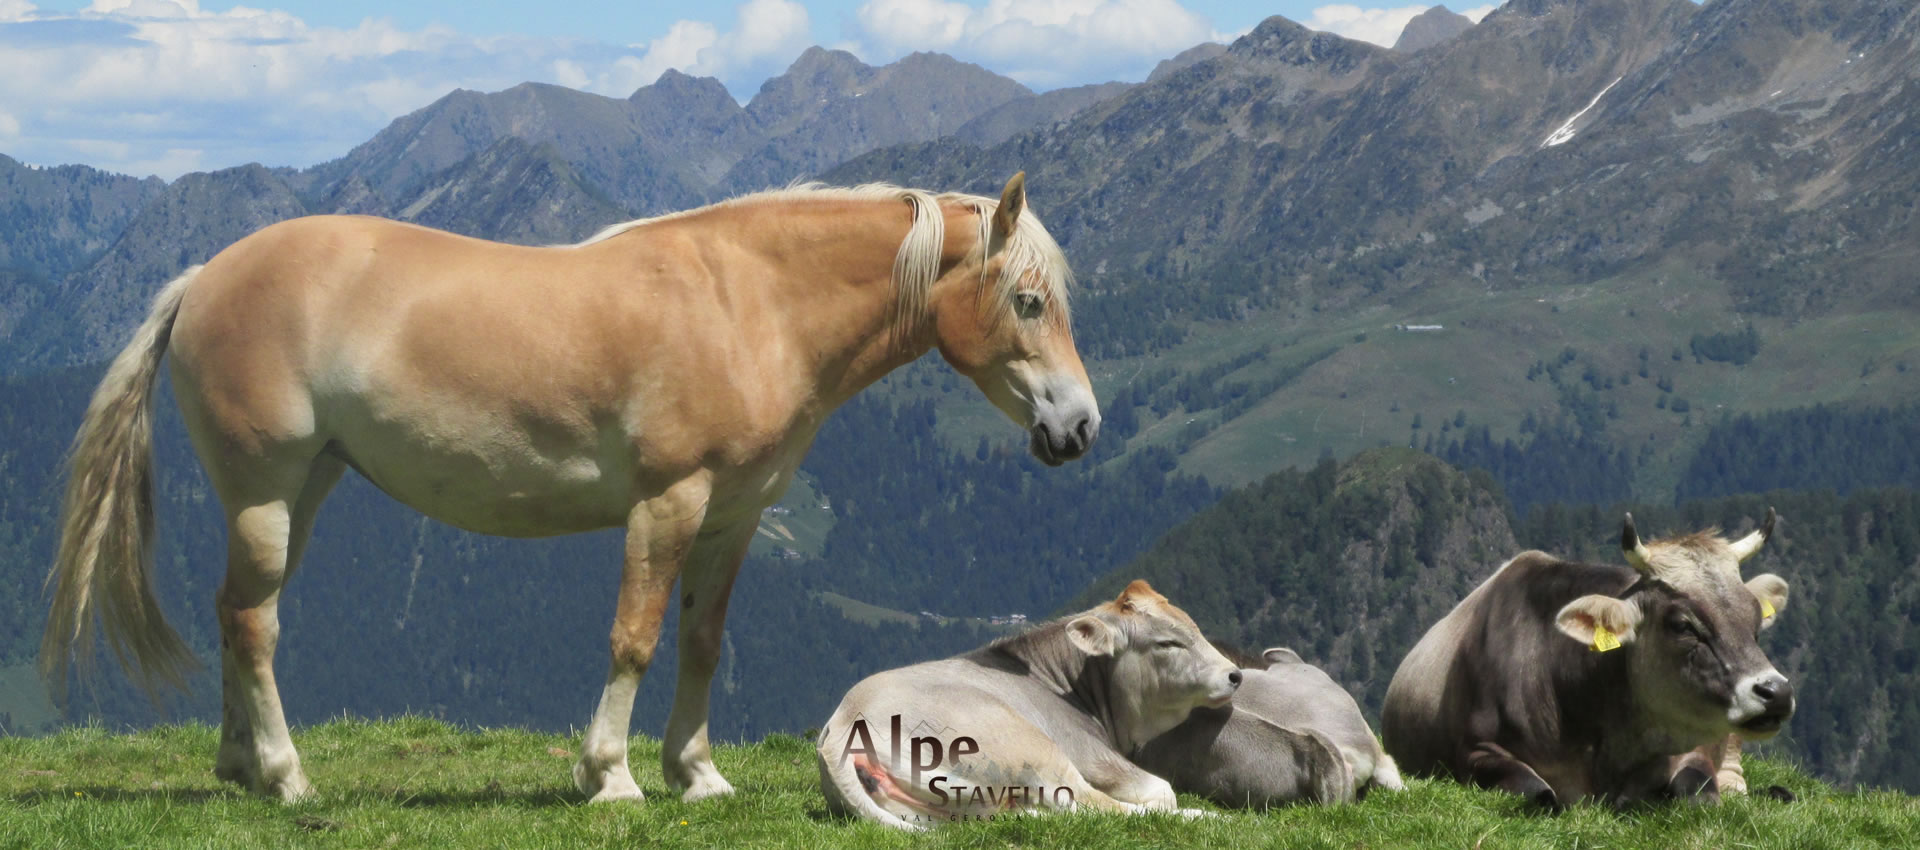 Alpe Stavello - Azienda agricola Alpe Stavello - Rifugio